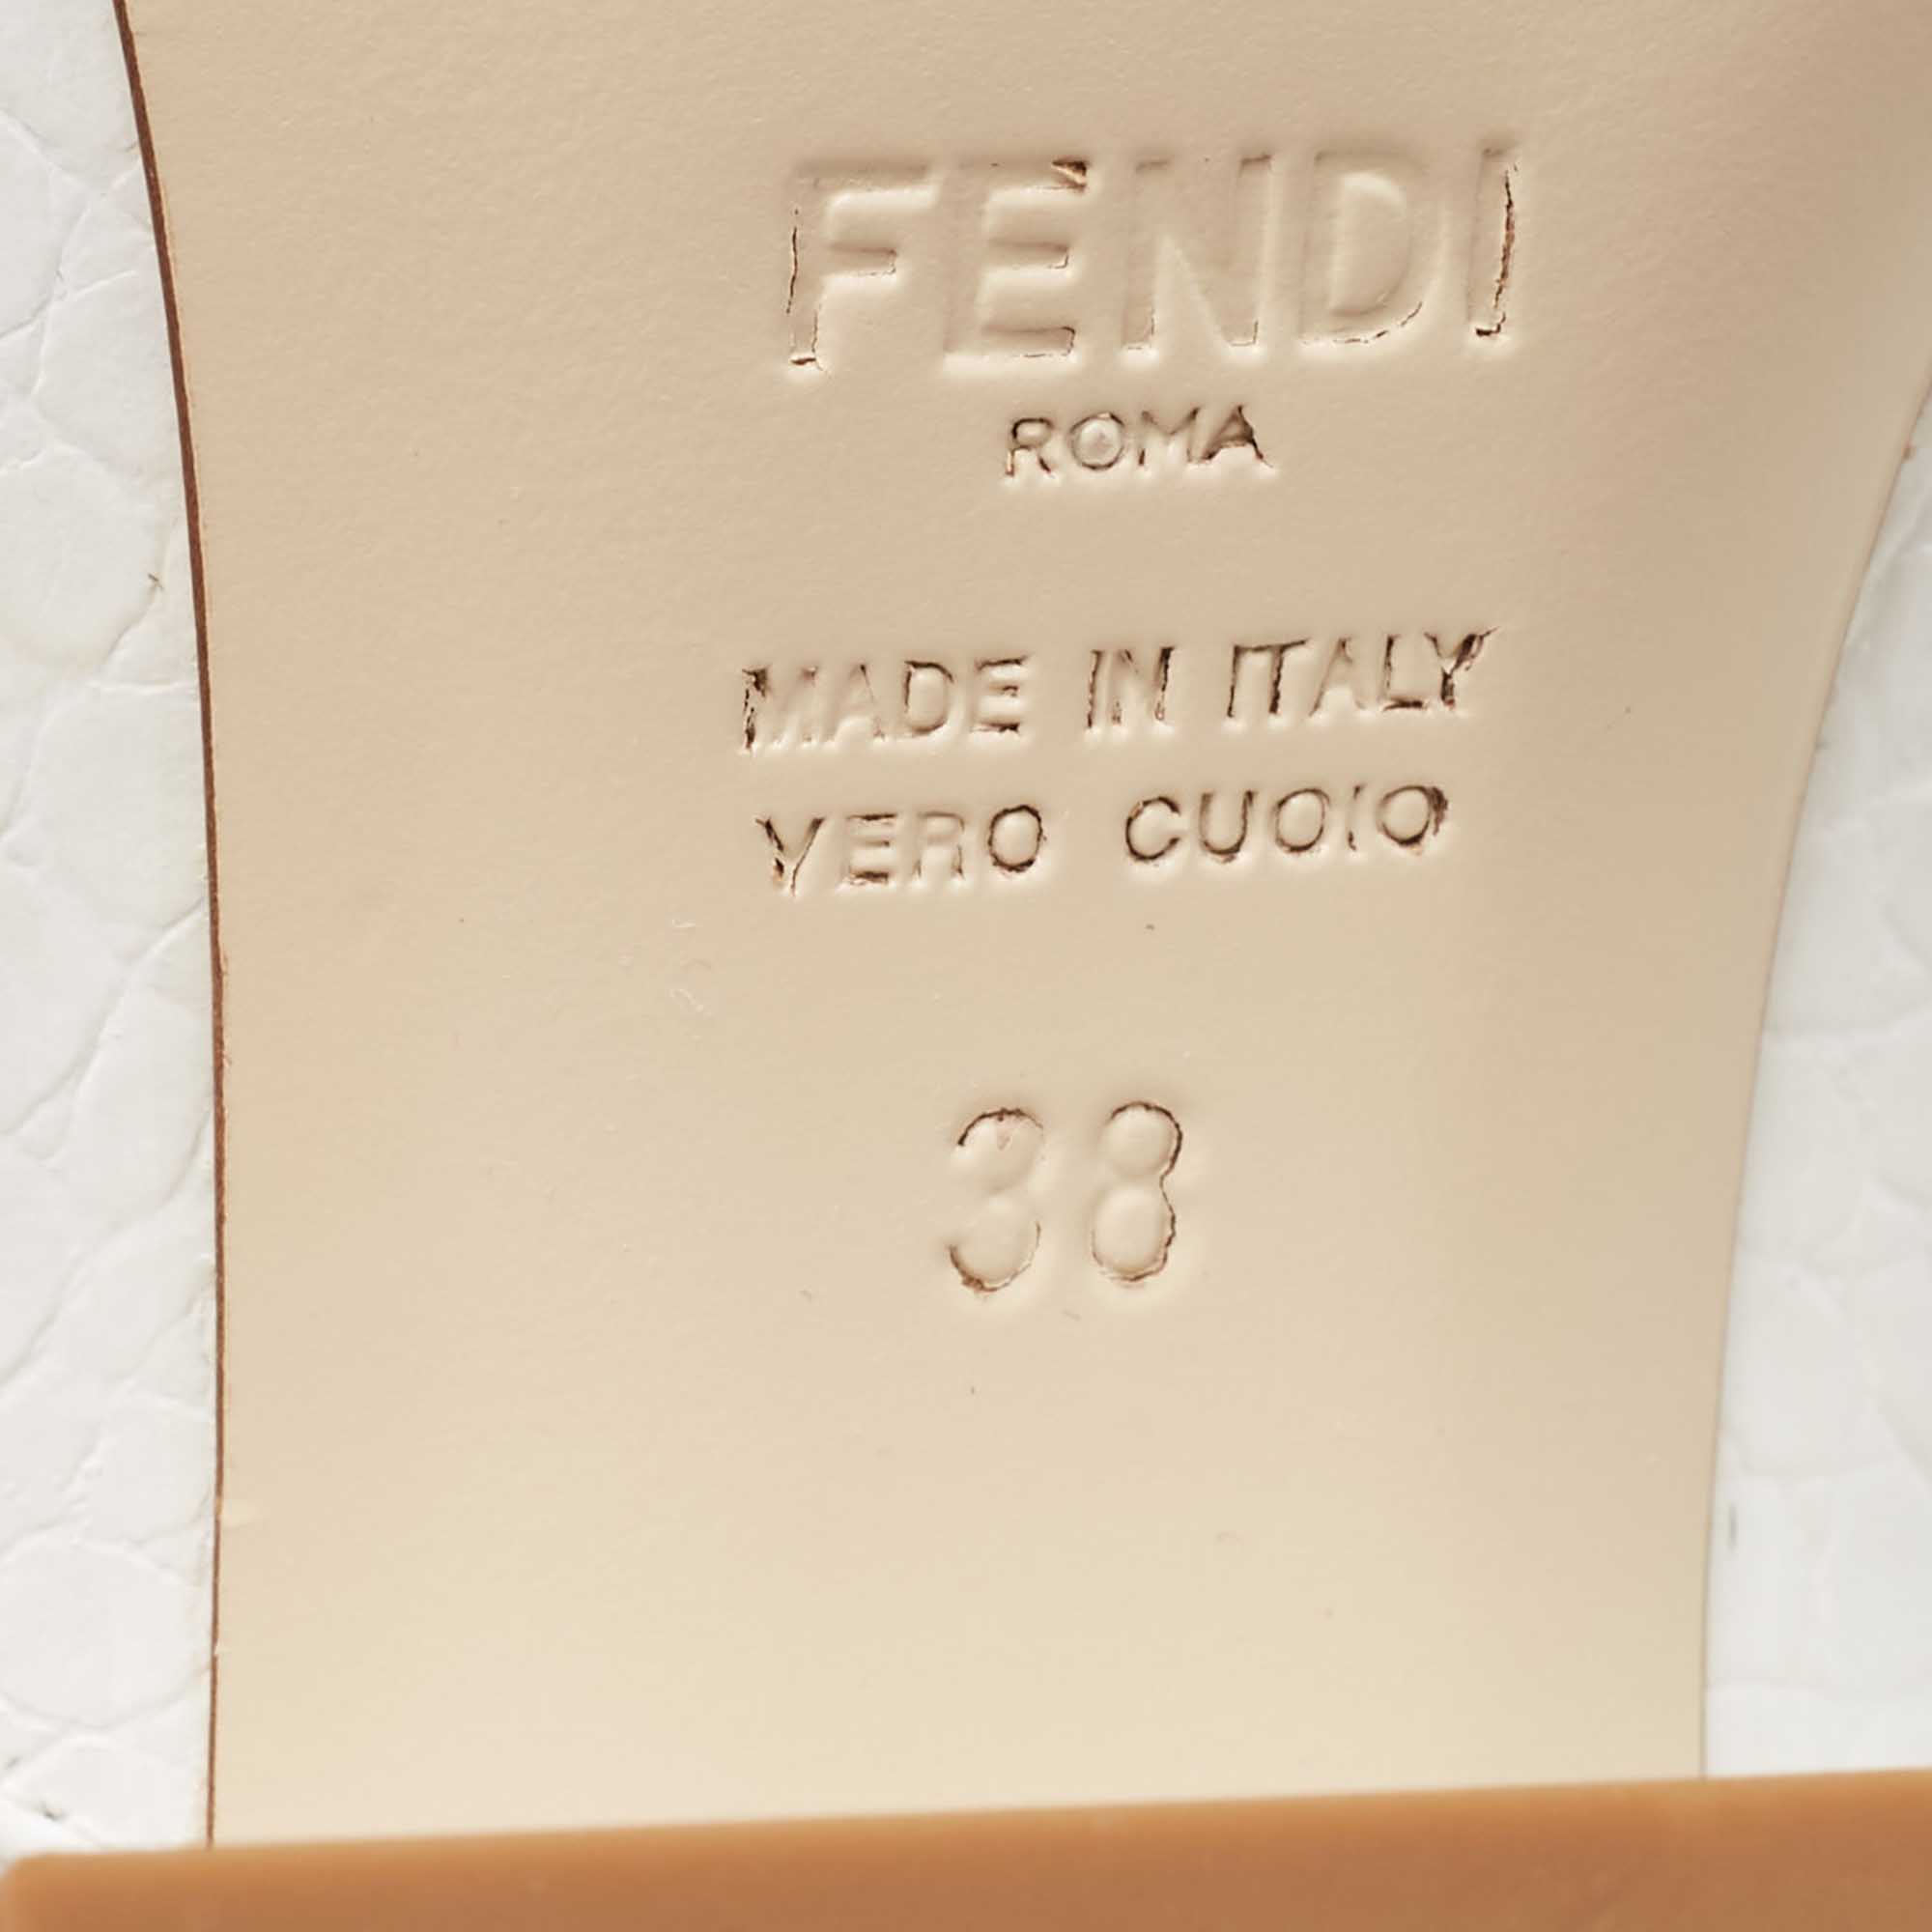 Fendi White Croc Embossed Leather Promenade Knee Length Boots Size 38